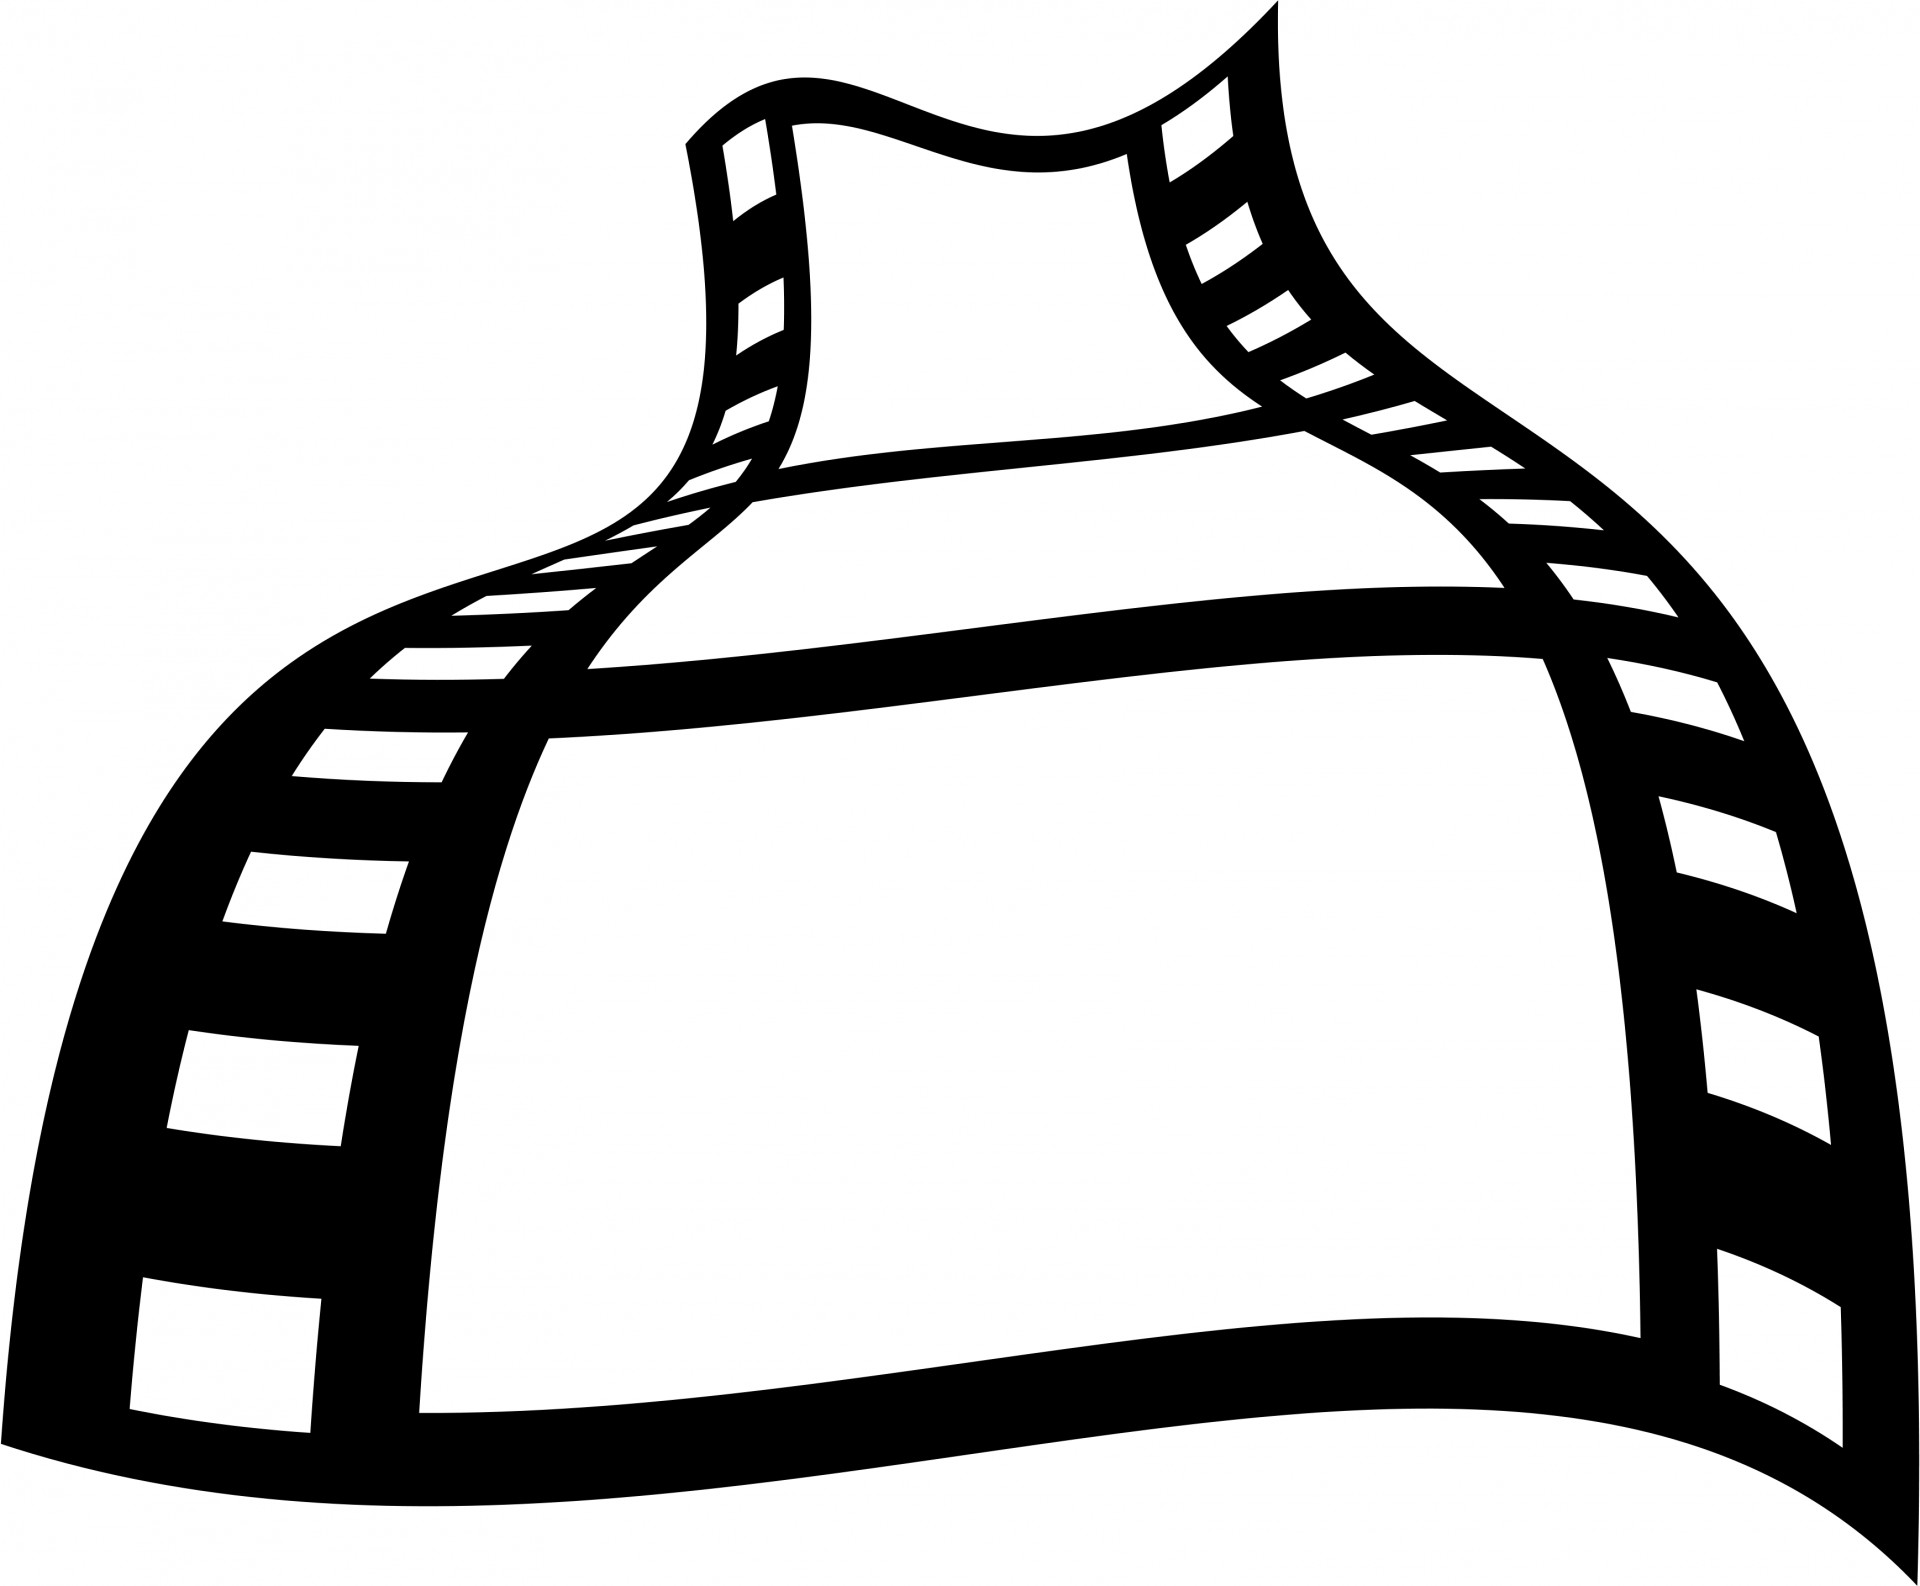 Movie reel movie film strip clip art image 4